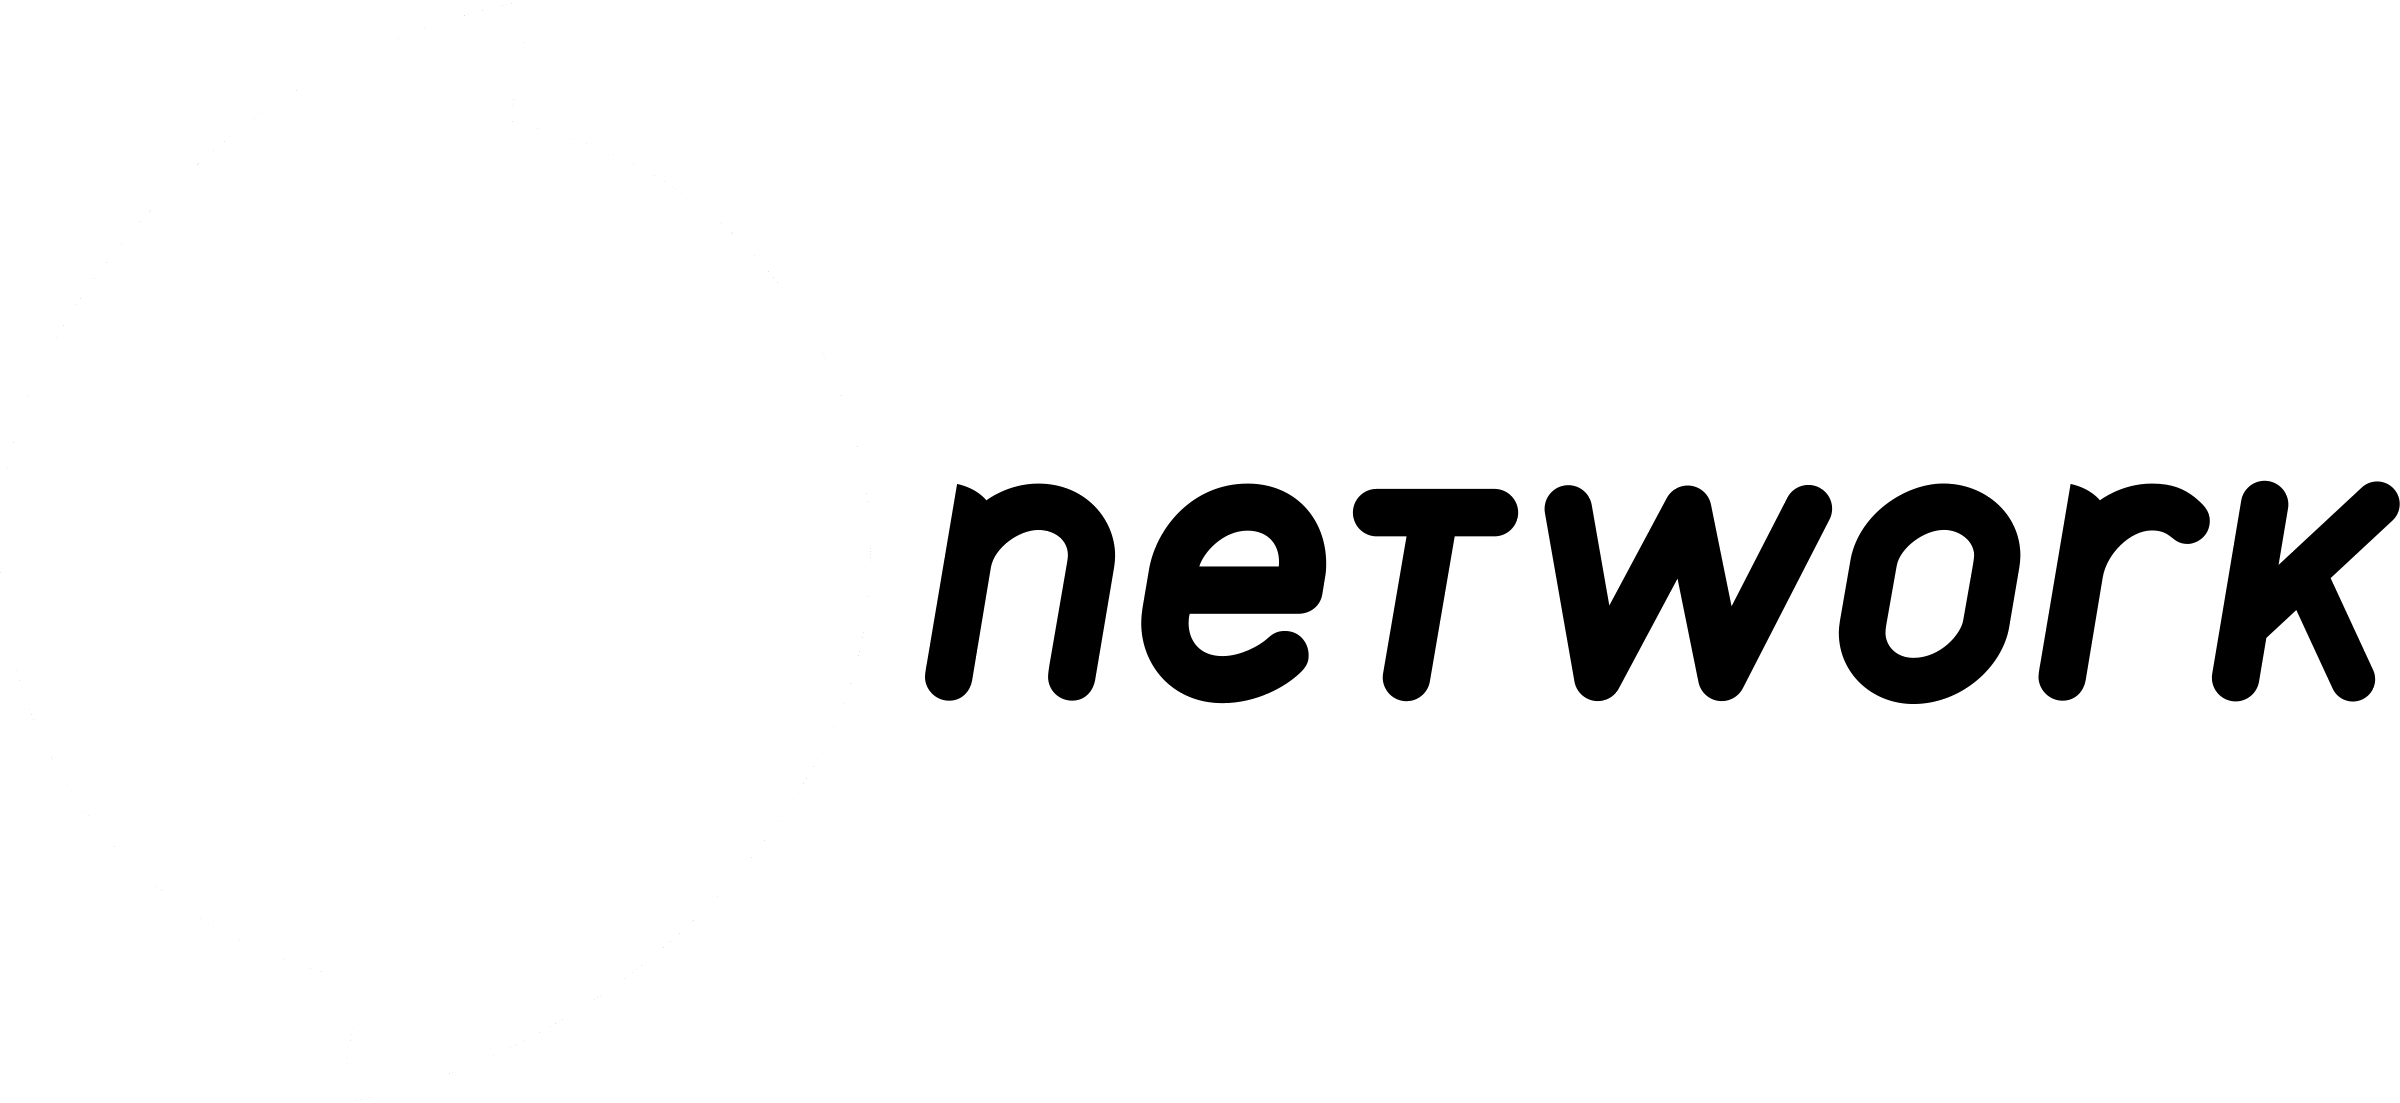 Hub Network Logo - Hub Network Logo PNG Transparent & SVG Vector - Freebie Supply